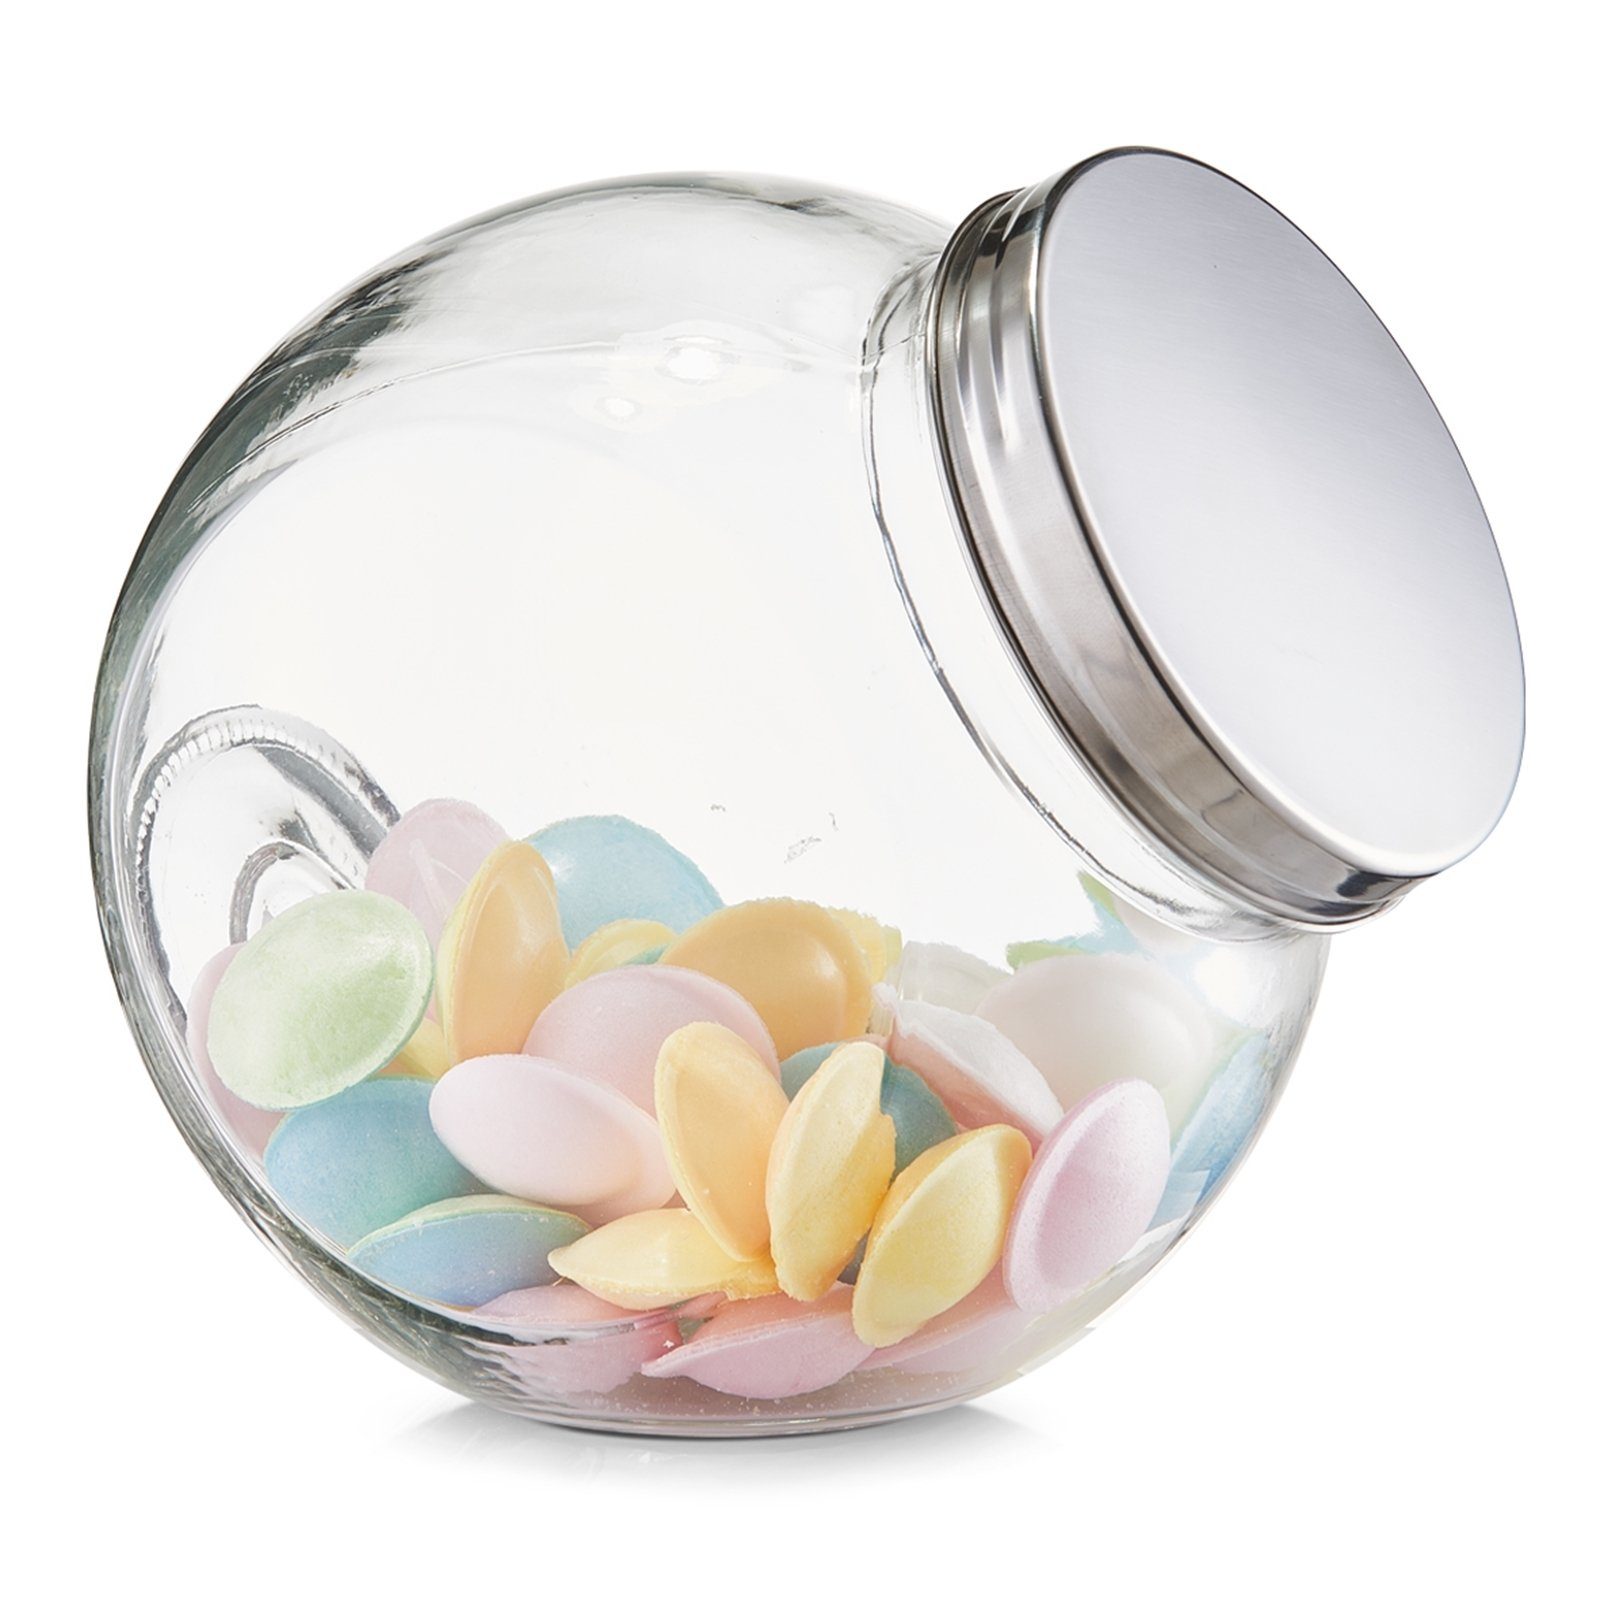 Vorratsglas (Stück, Candy Vorratsglas ml Present Candy Zeller Vorratsglas Zeller 2850 2850 ml, Glas, 1-tlg), Present